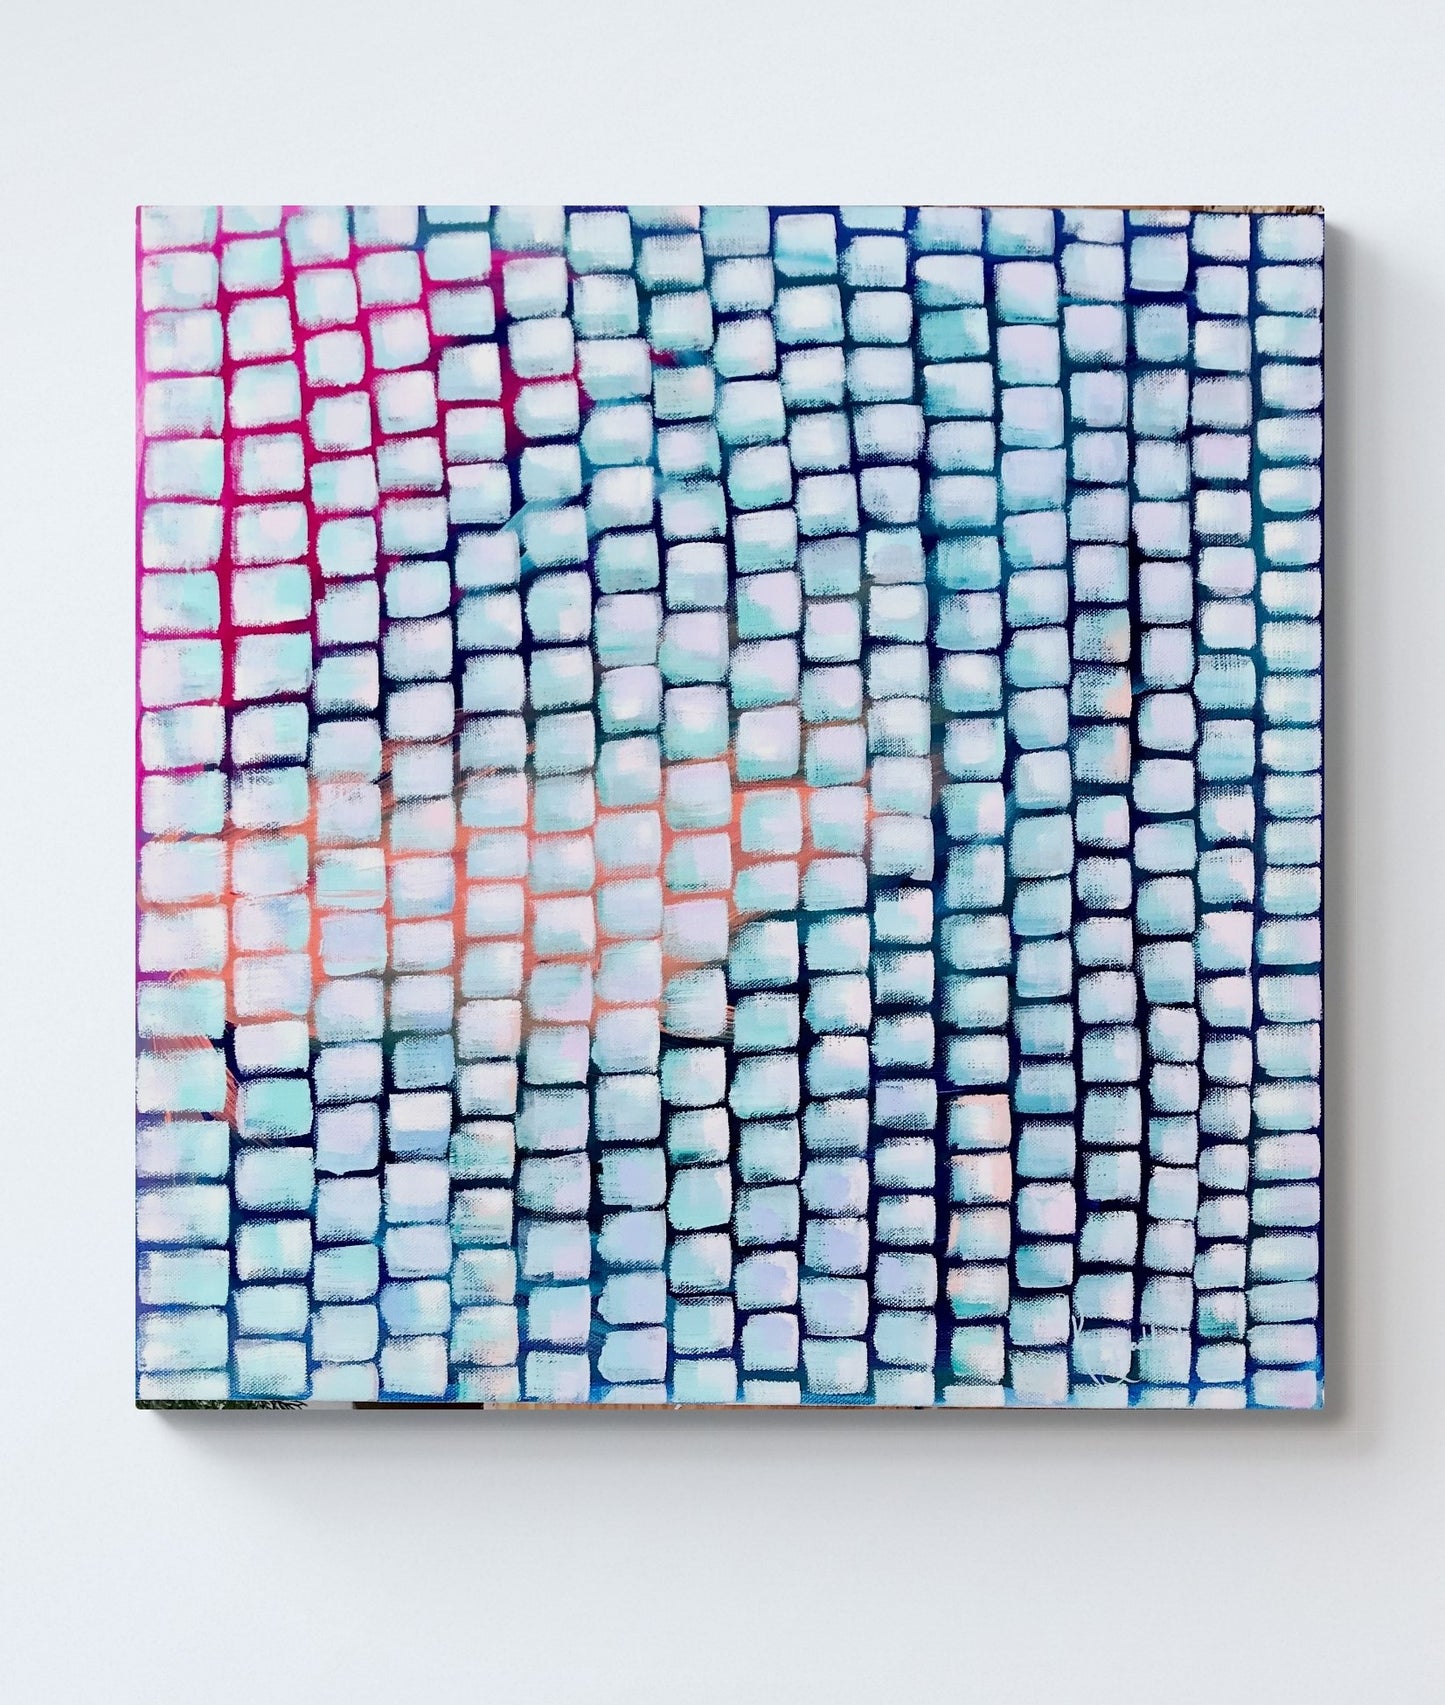 Mosaics are paper thin - Framed original